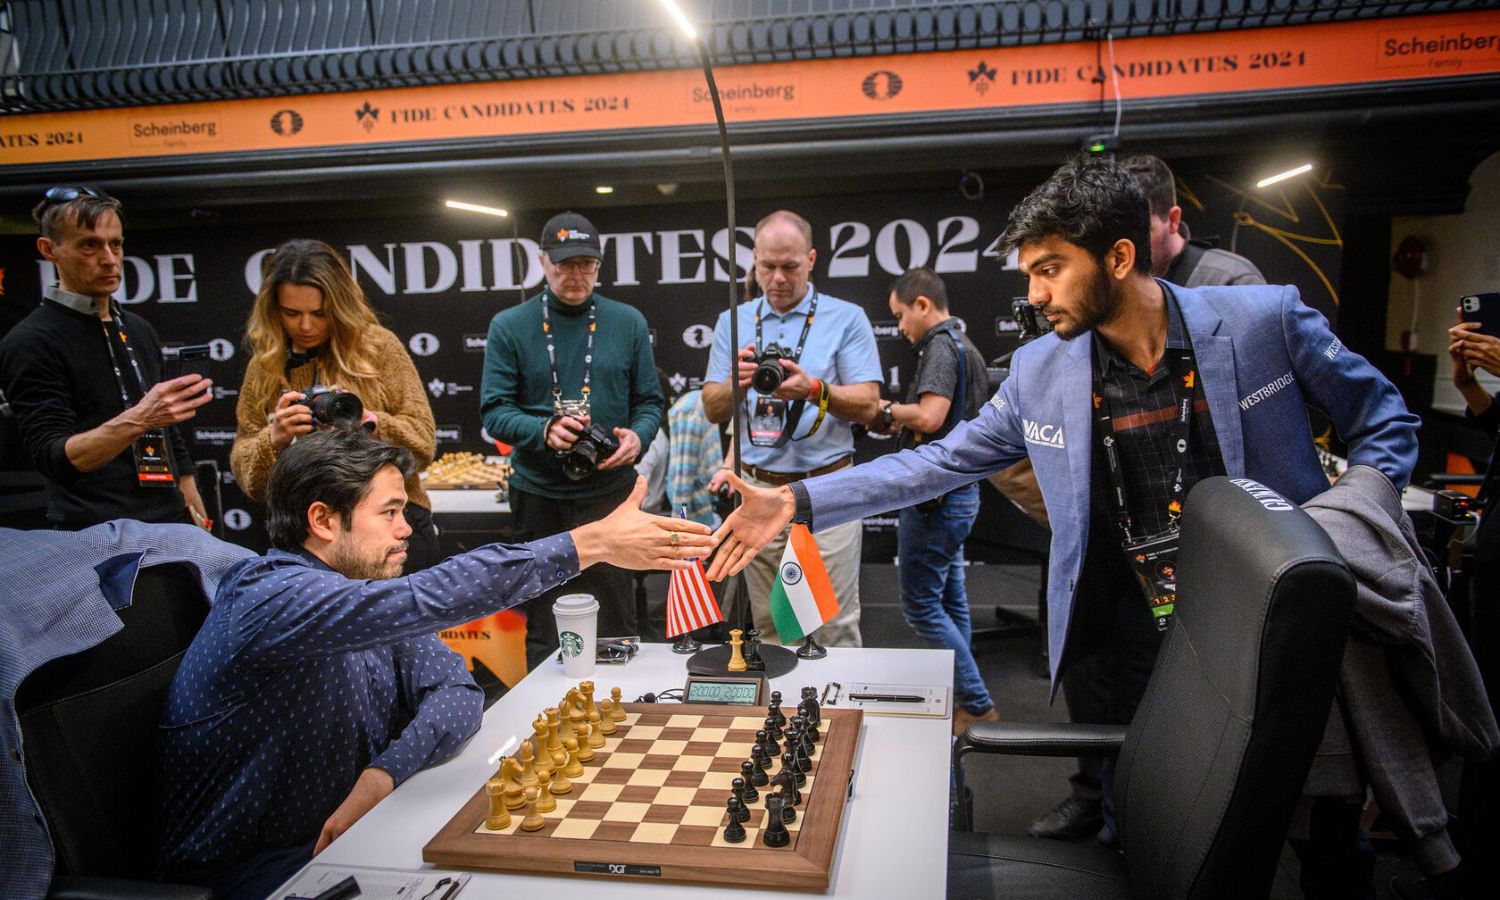 Coach Vishnu Prasanna on his ward's FIDE Candidates triumph